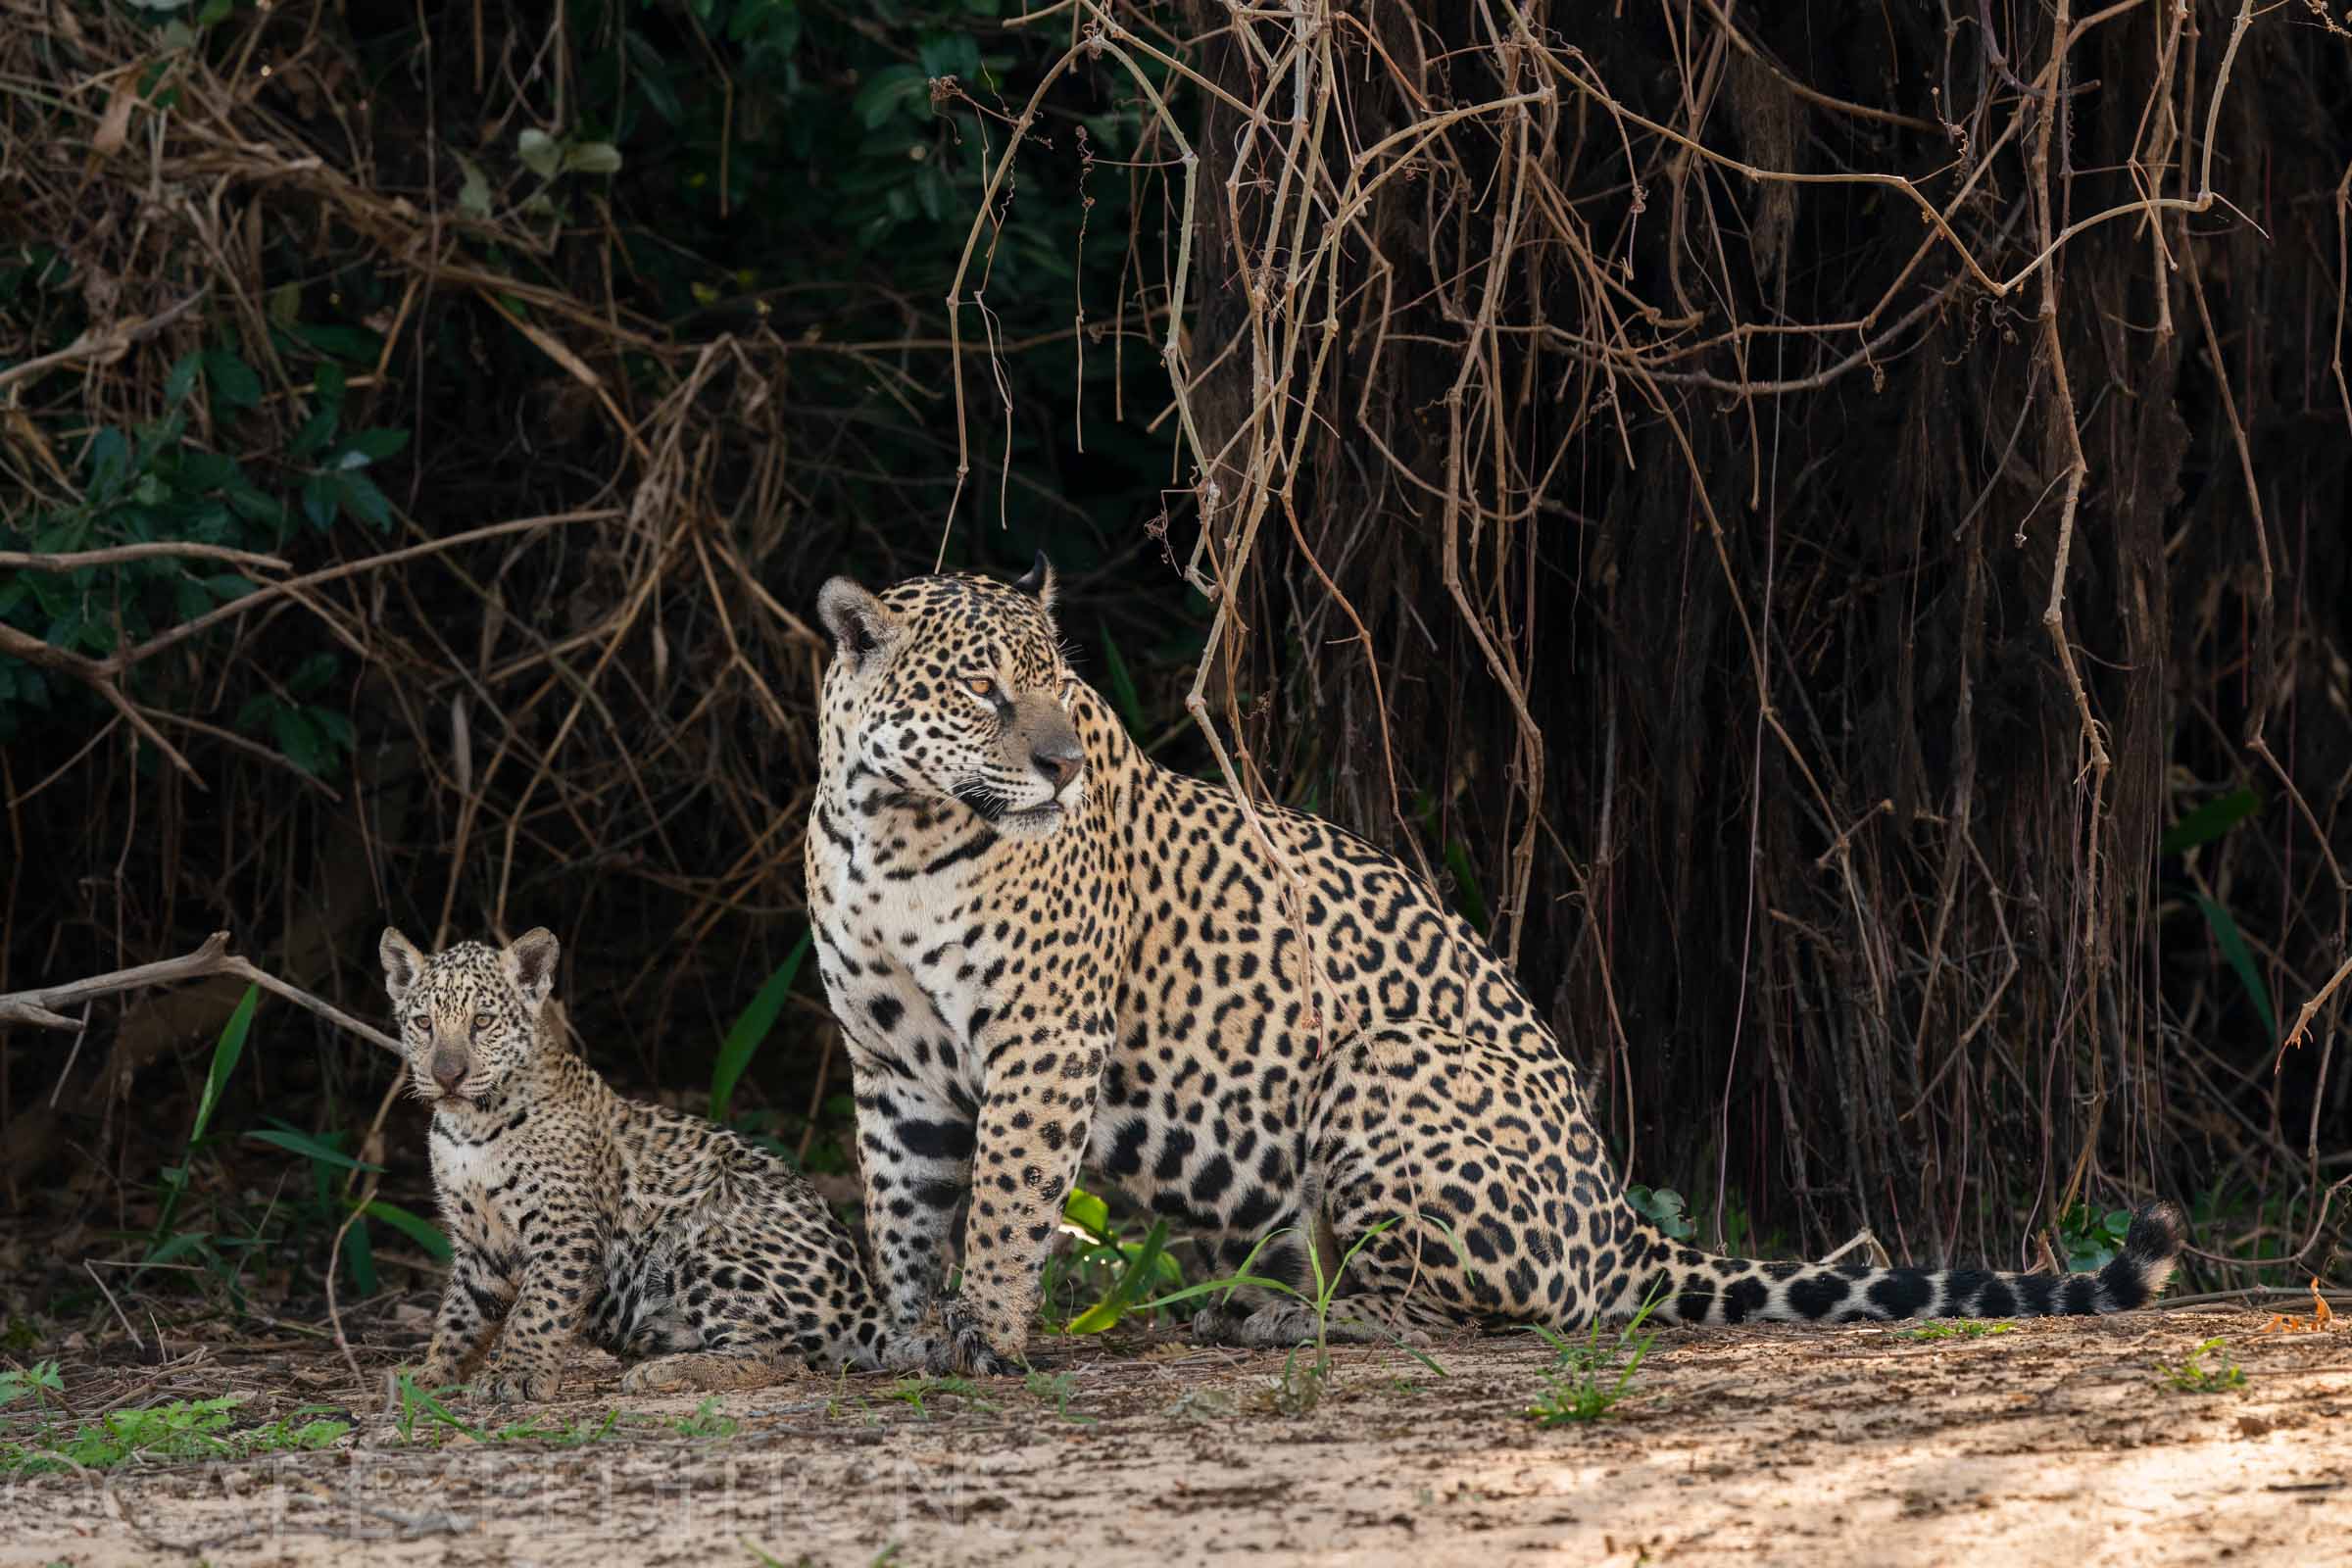 Jaguar mother and cub in the Pantanal of Brazil